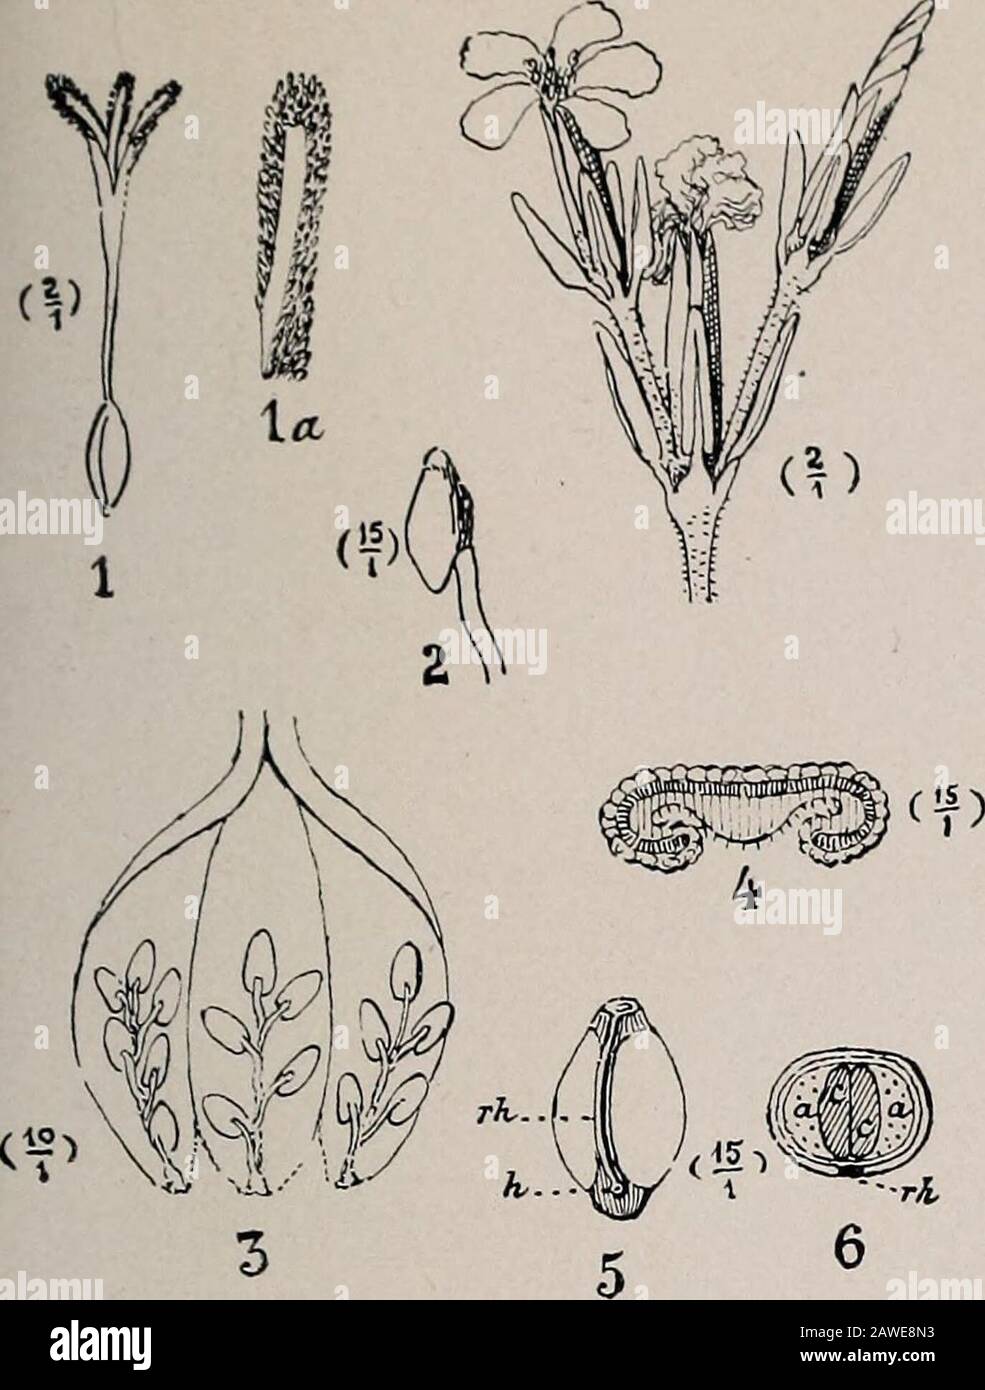 Transactions and proceedings of the Royal Society of South Australia (Incorporated) . Atriplex crassipes % *?• Frankenia serpyllifolia Lindi. HOSSEY A 6lLL,N6HAM LIMITED, PHiNTERS U PUBLISHERS ADELA DE, SO.AUS. Trans, and Proc. Rov. Soc. S. A list r Vol. XLII., Plate XVII.. Frankenia pauciflora dc. Stock Photo